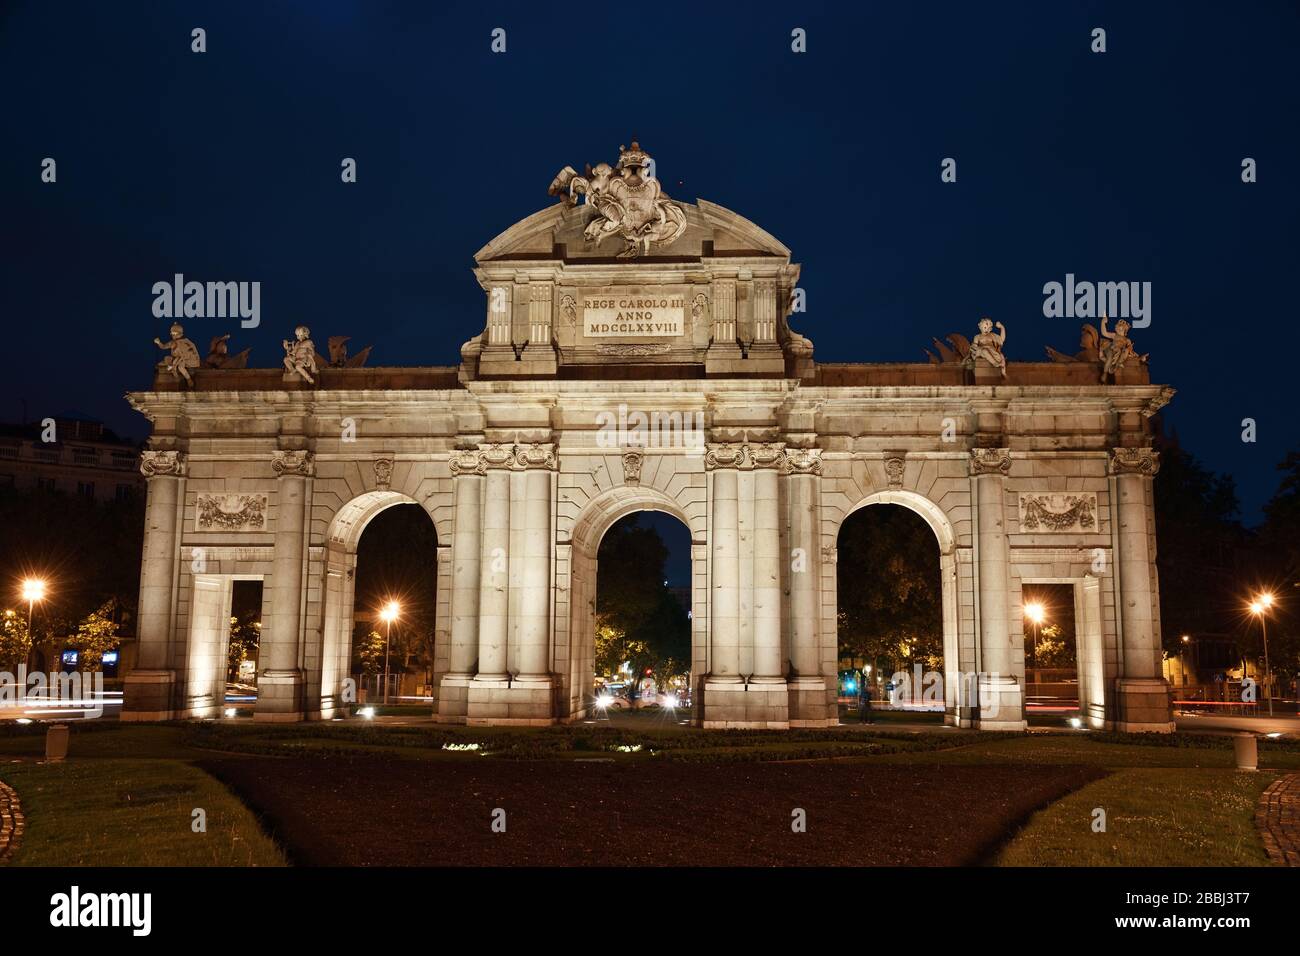 Puerta de Alcala or Alcala Gate at night closeup view in Madrid Spain. Stock Photo